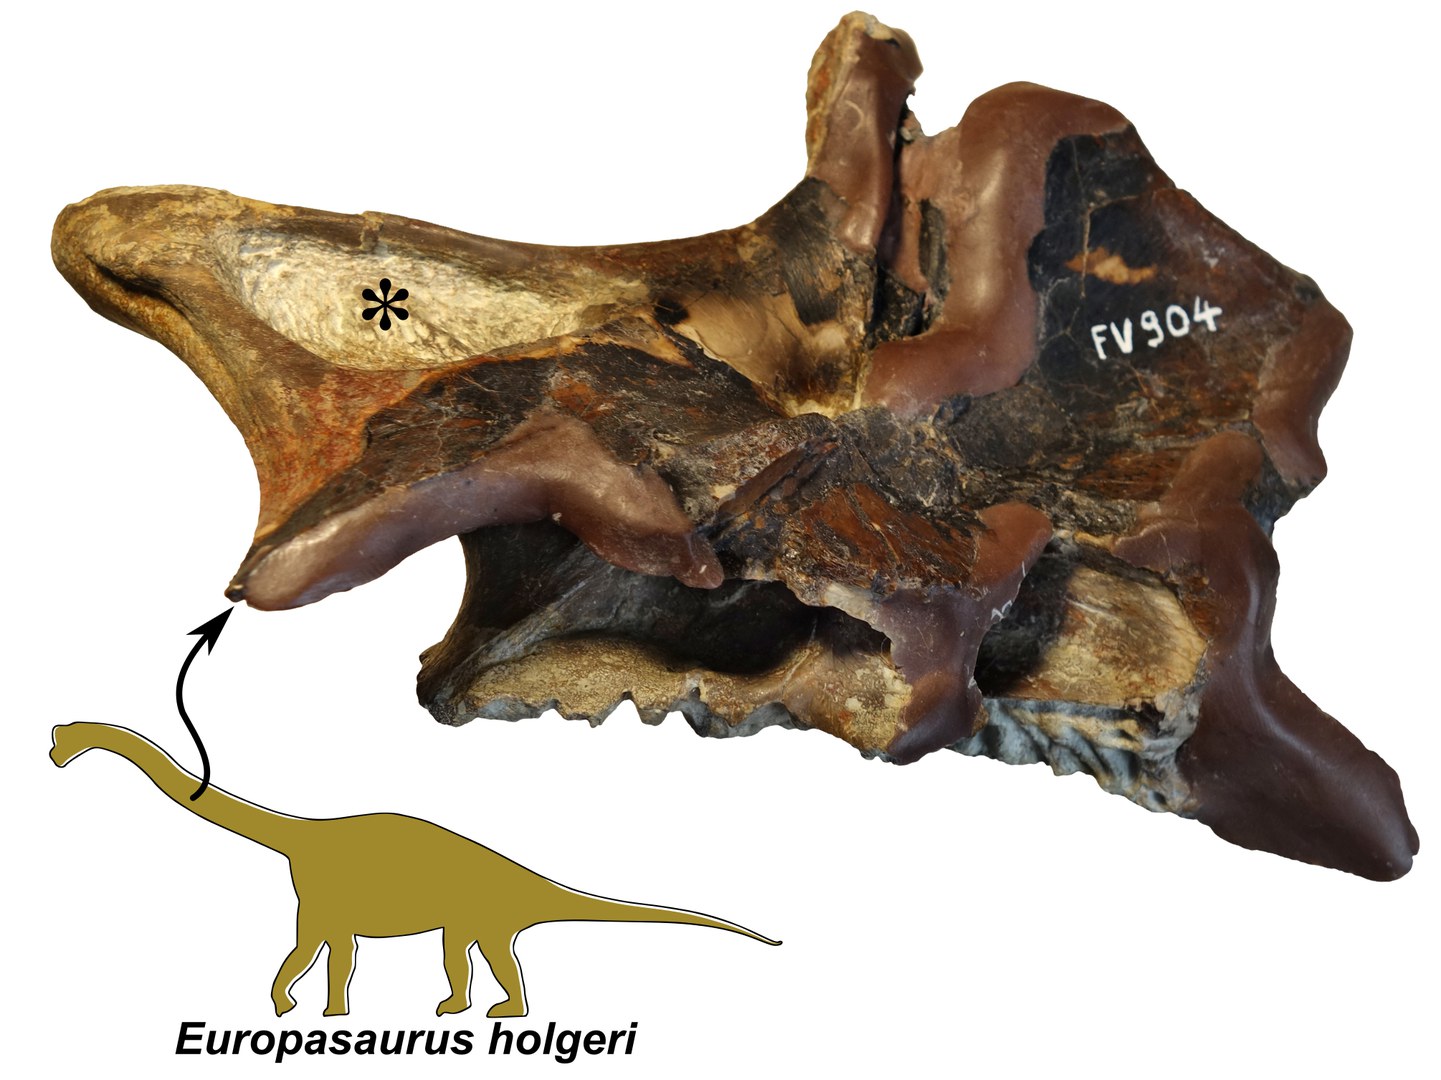 Part of a neck vertebra of the dwarf sauropod Europasaurus